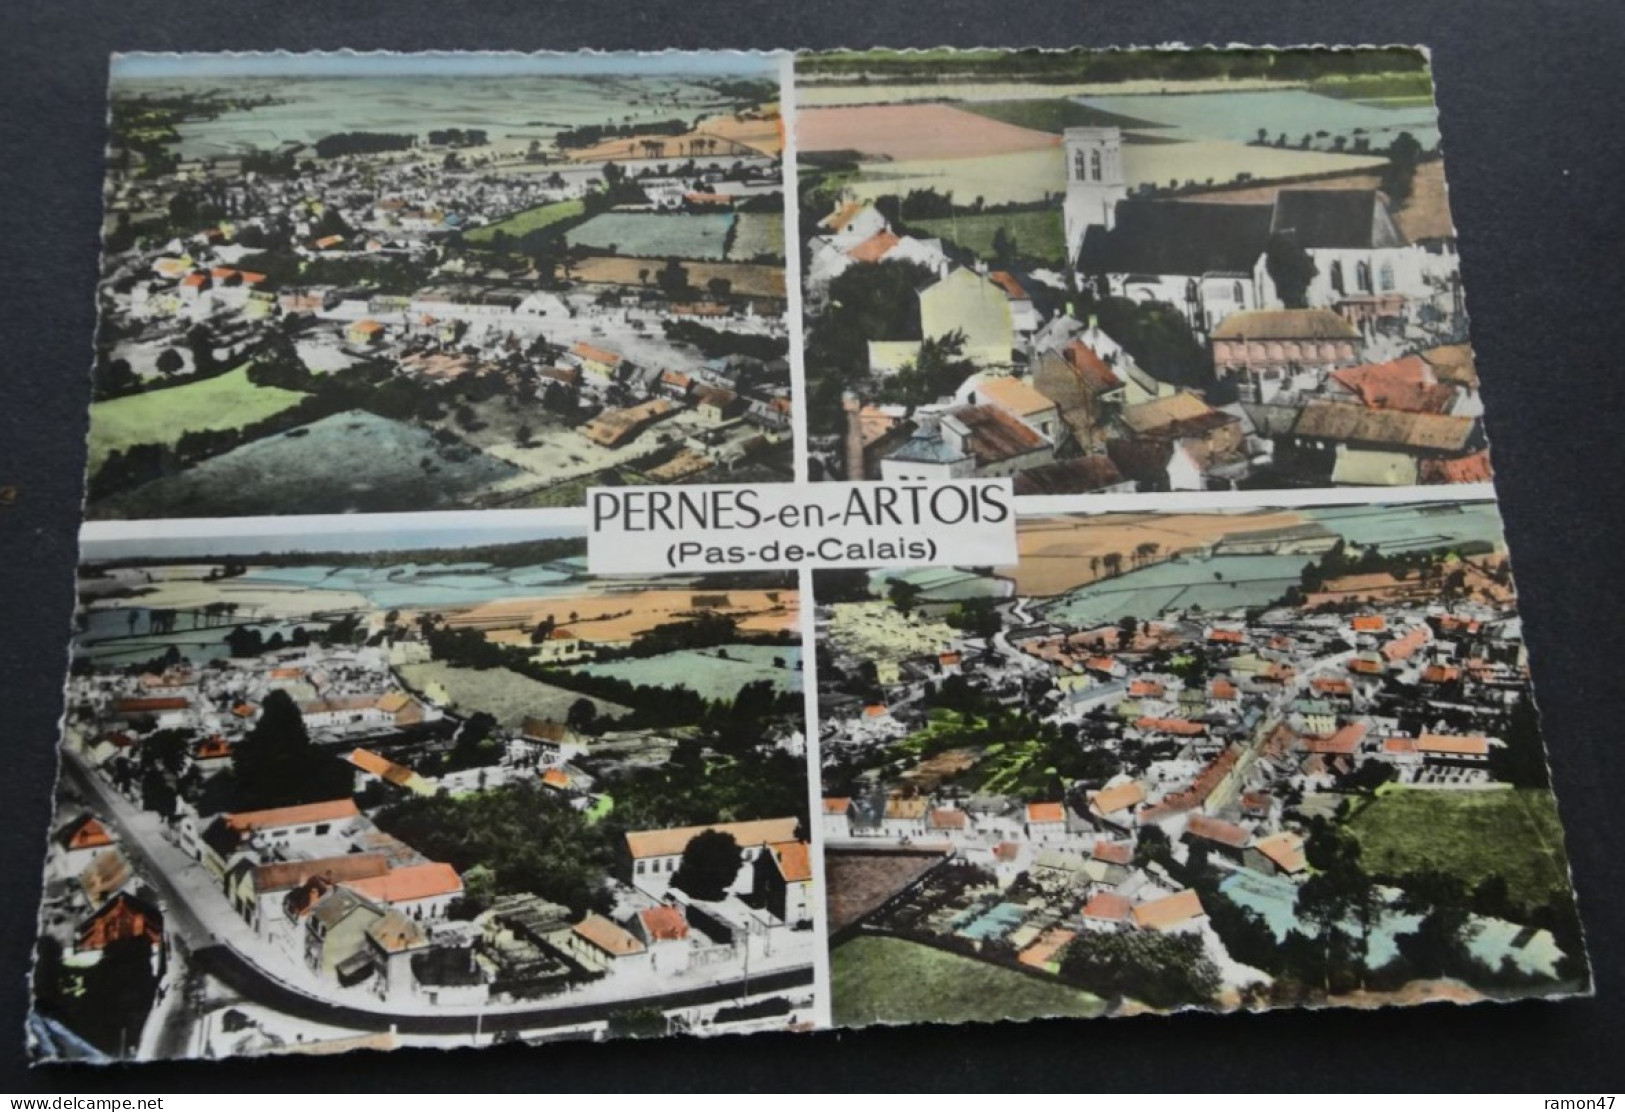 Pernes-en-Artois - Combier Imp. Mâcon (CIM) - Arras